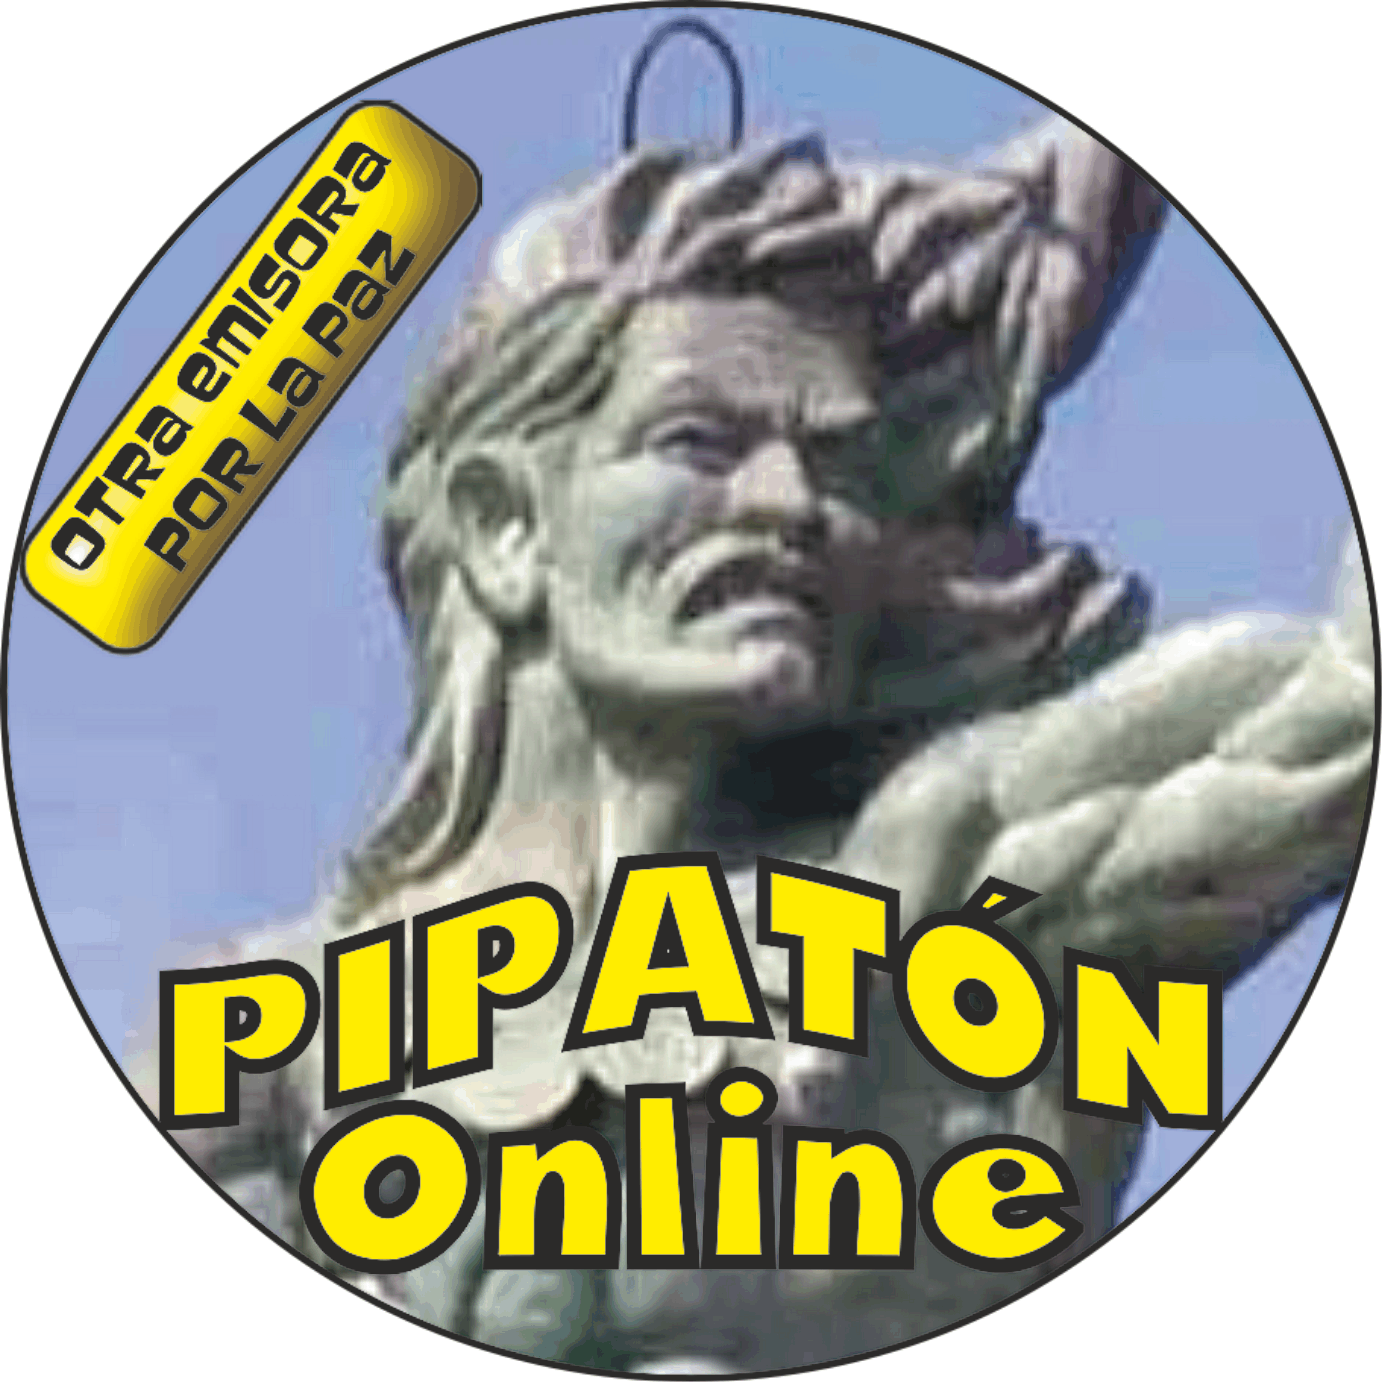 Pipatón Online